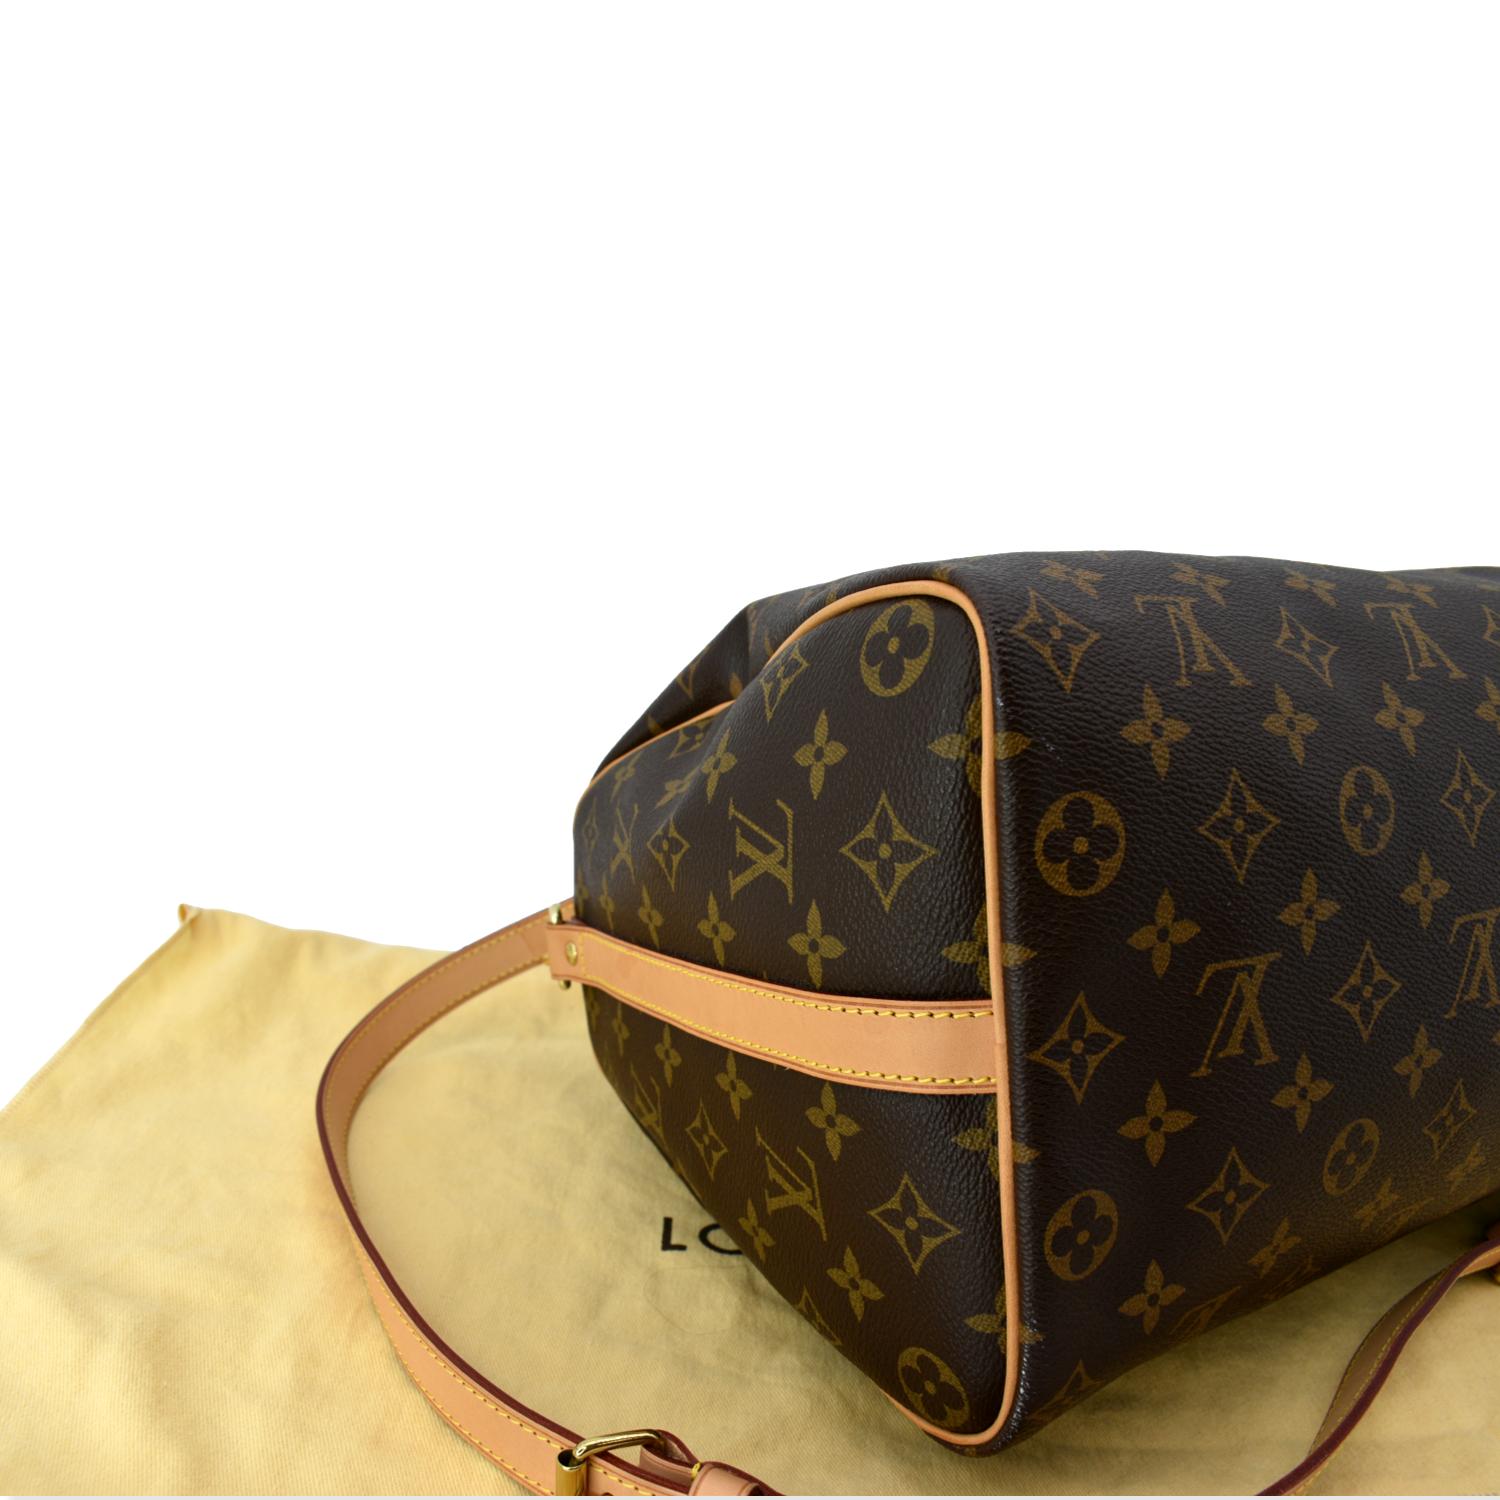 🌸 Louis Vuitton Speedy 35 Monogram Doctor Style Handbag (AA2008